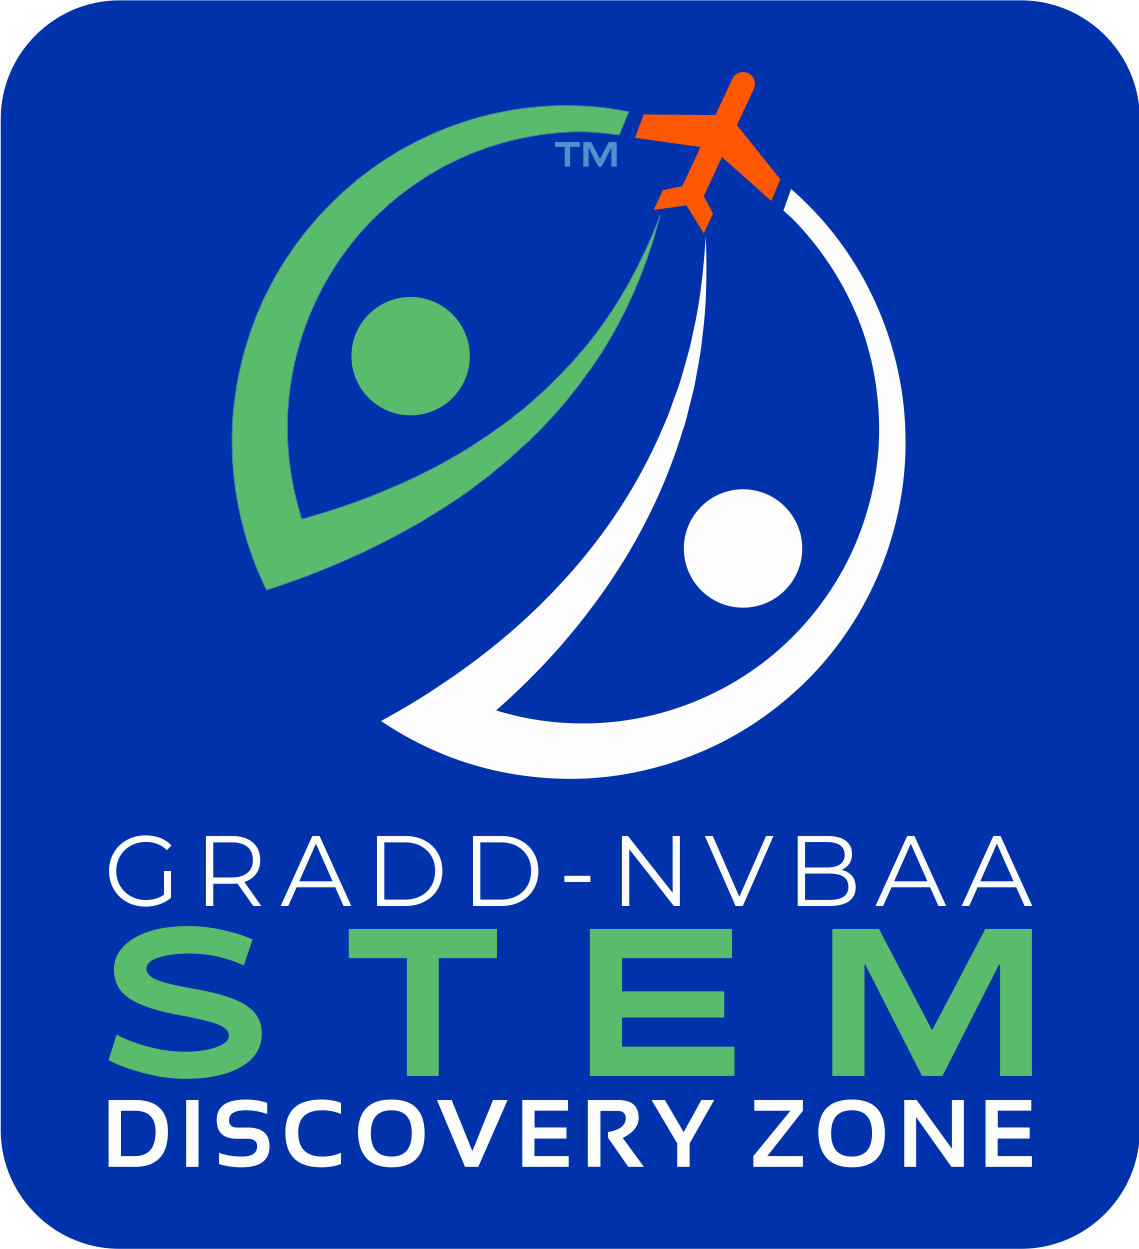 NVBAA STEM Discovery Zone